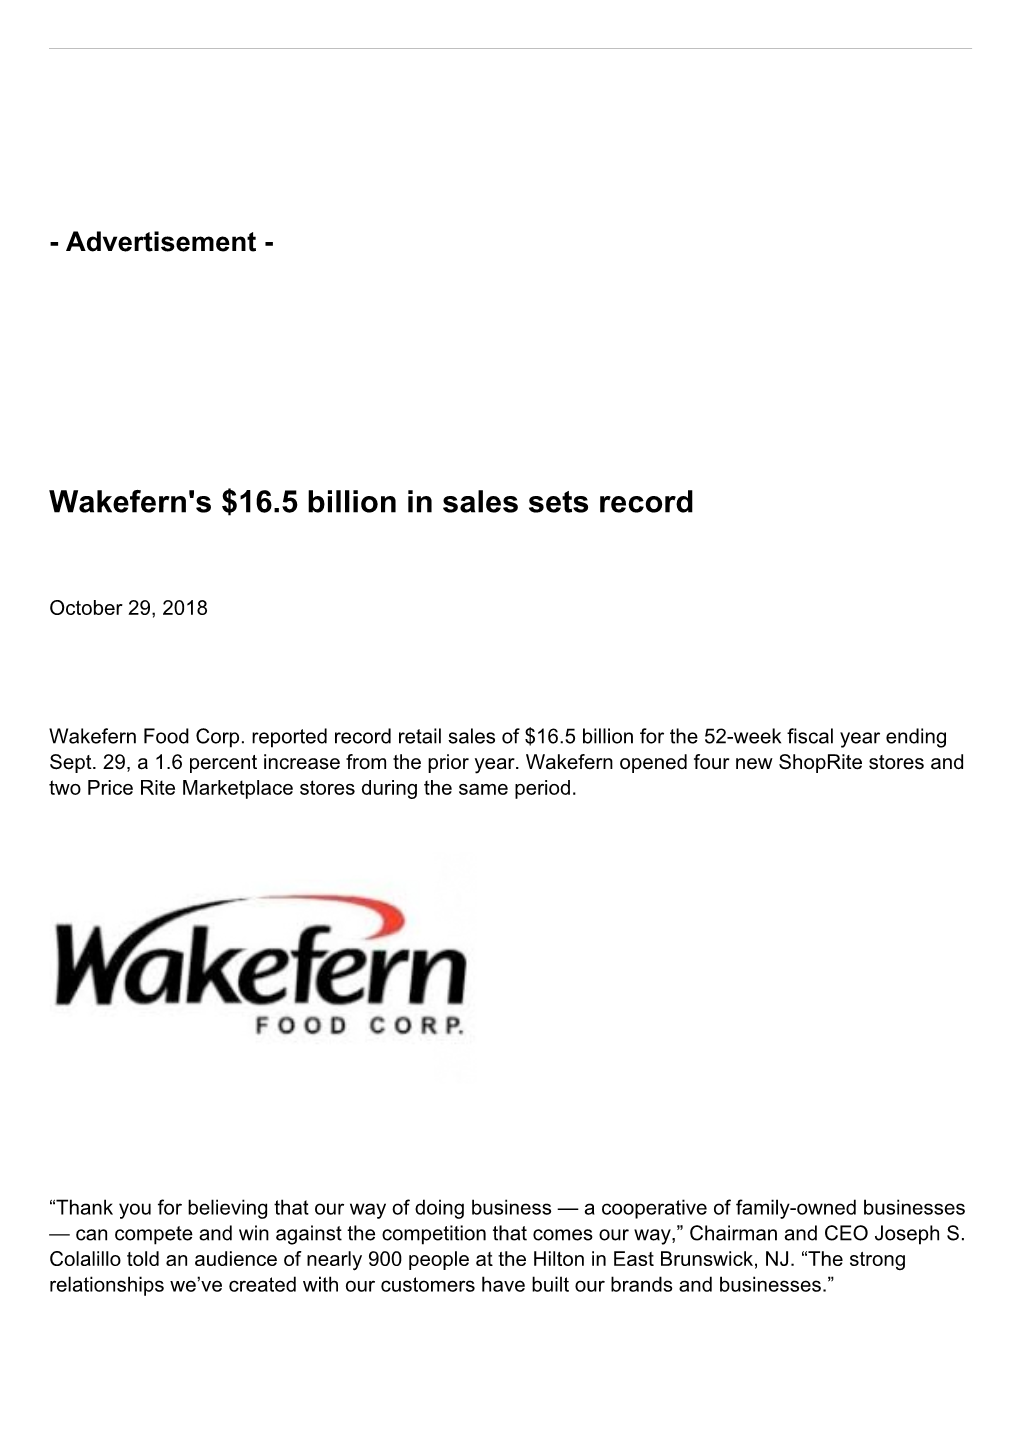 Wakefern's $16.5 Billion in Sales Sets Record